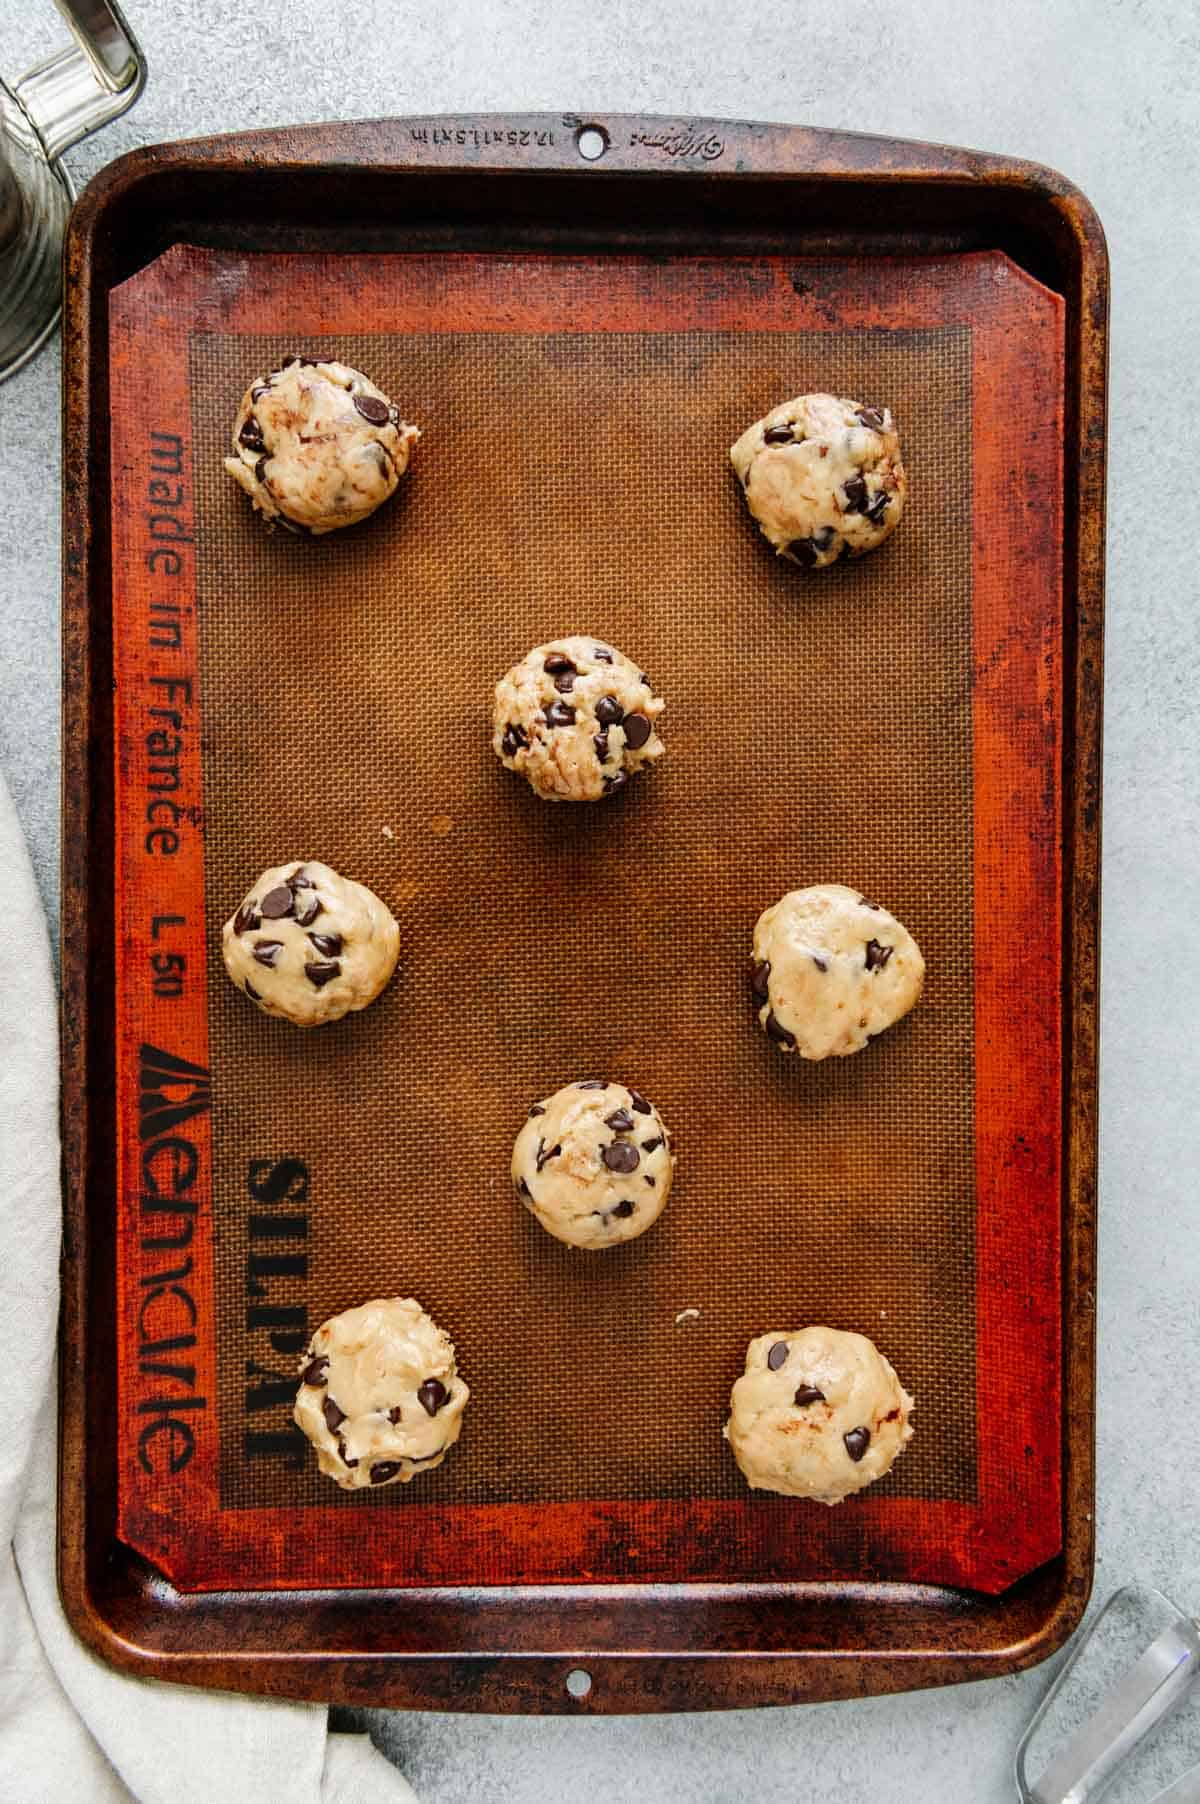 Nutella stuffed cookies on a baking sheet.